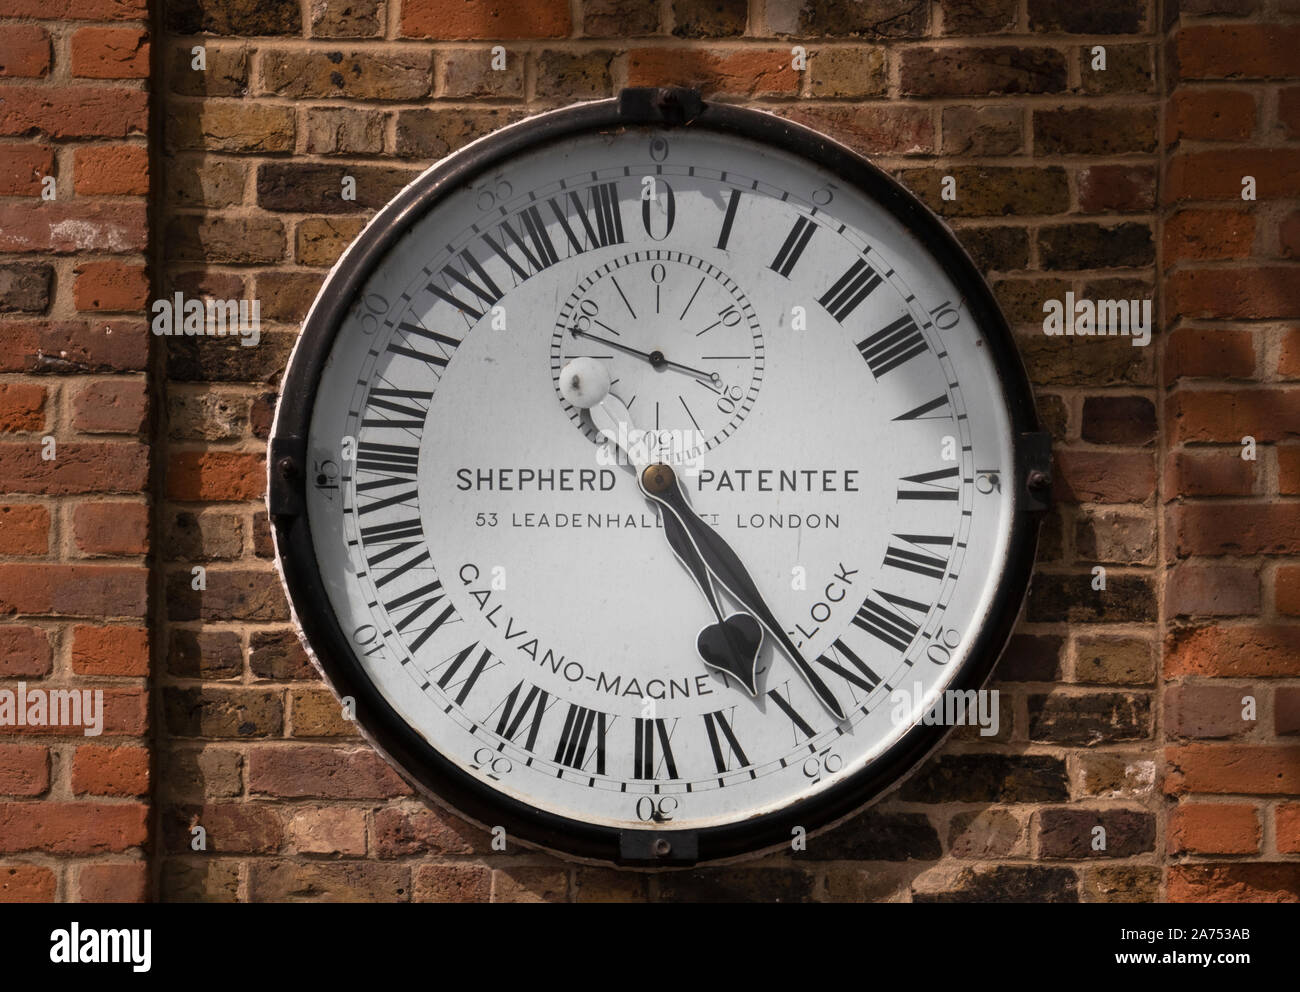 The Shepherd Gate 24 hour Clock, Royal Observatory Greenwich London UK Stock Photo